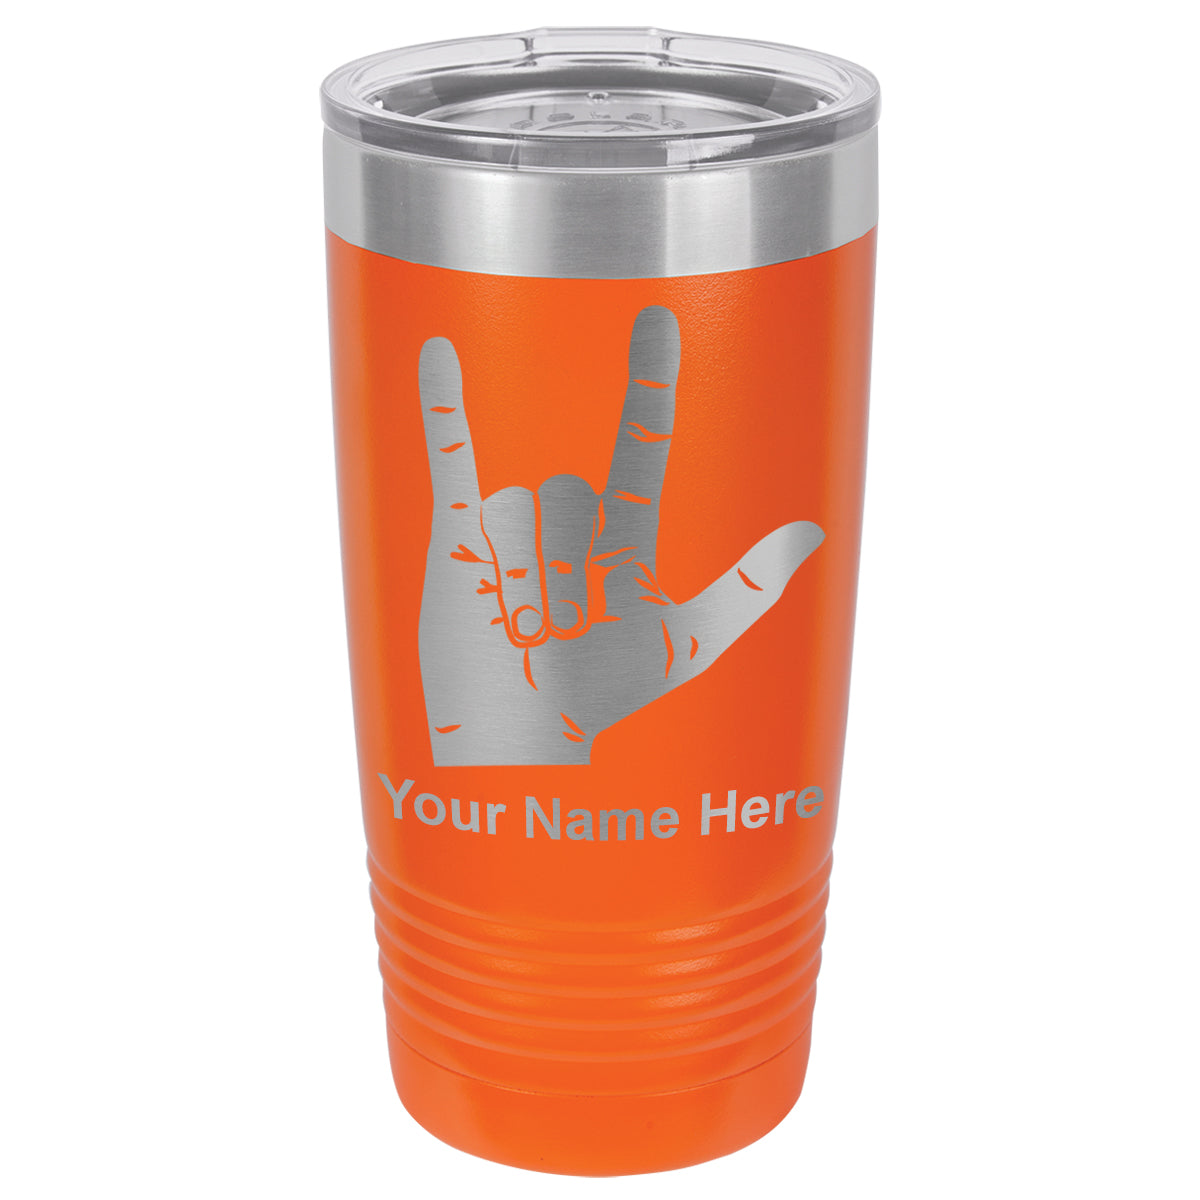 20oz Vacuum Insulated Tumbler Mug, Sign Language I Love You, Personalized Engraving Included